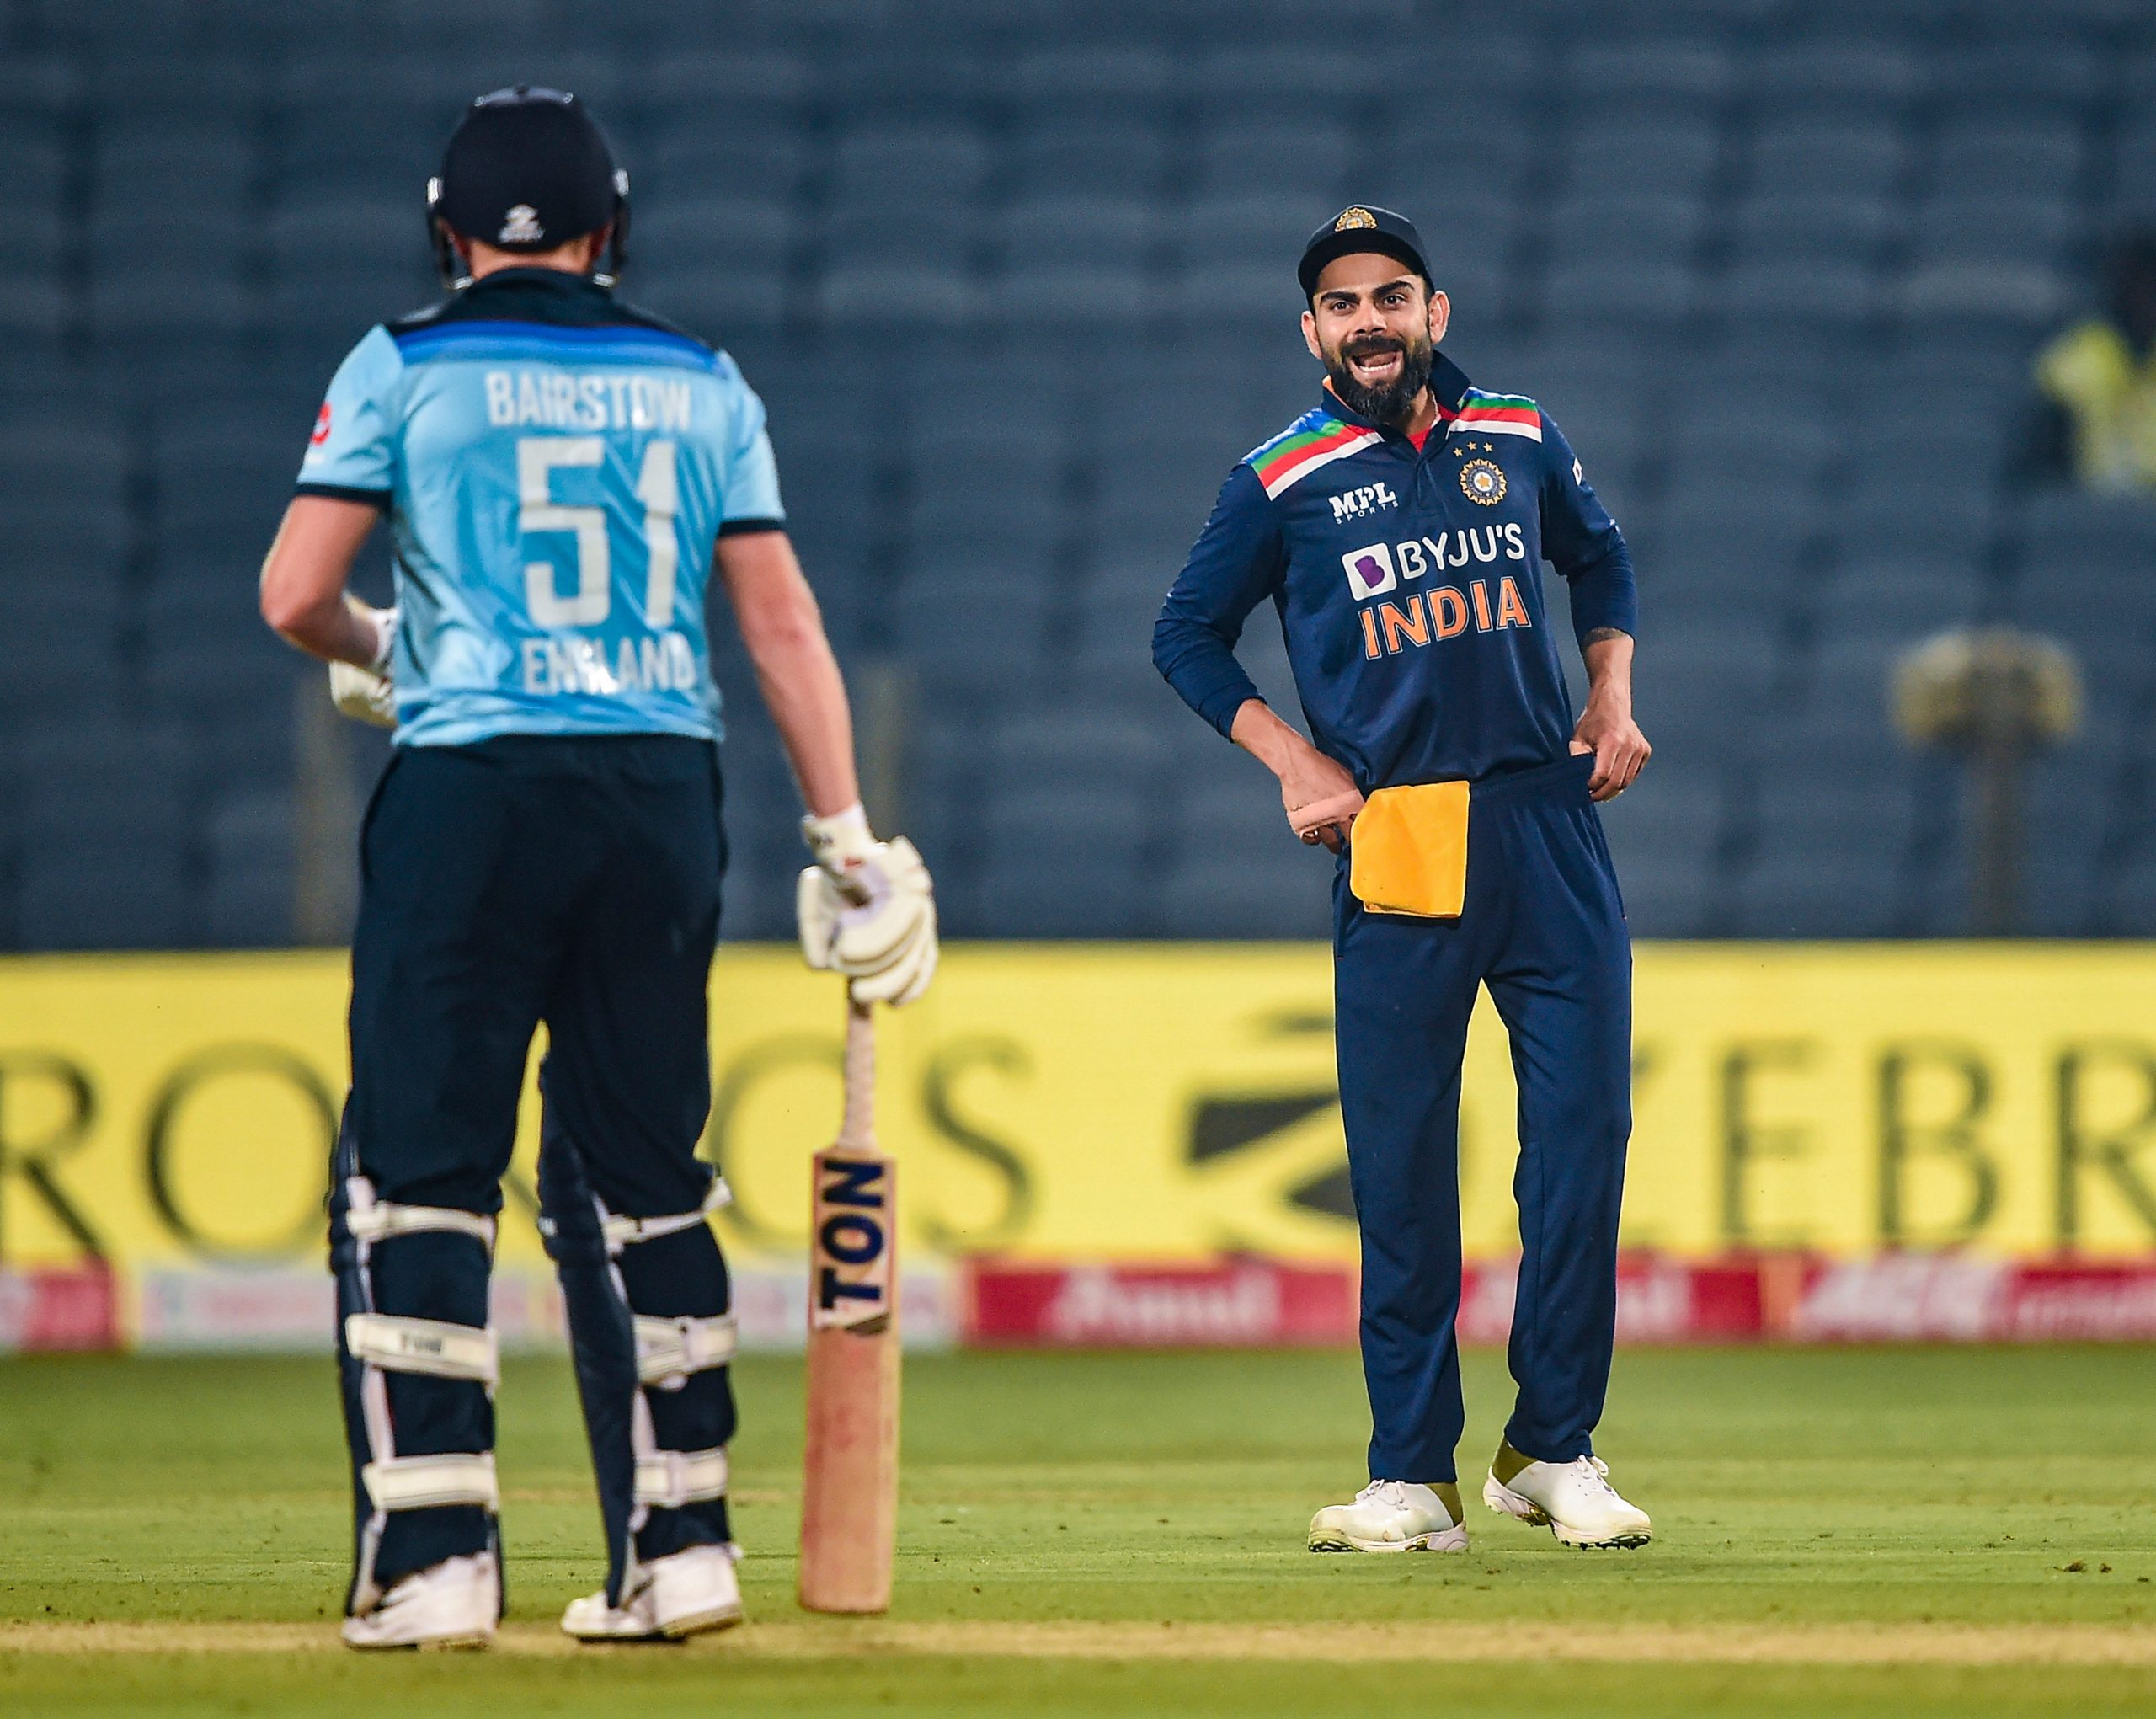 Ind vs Eng ODI: ‘One of our sweetest wins’, says Virat Kohli